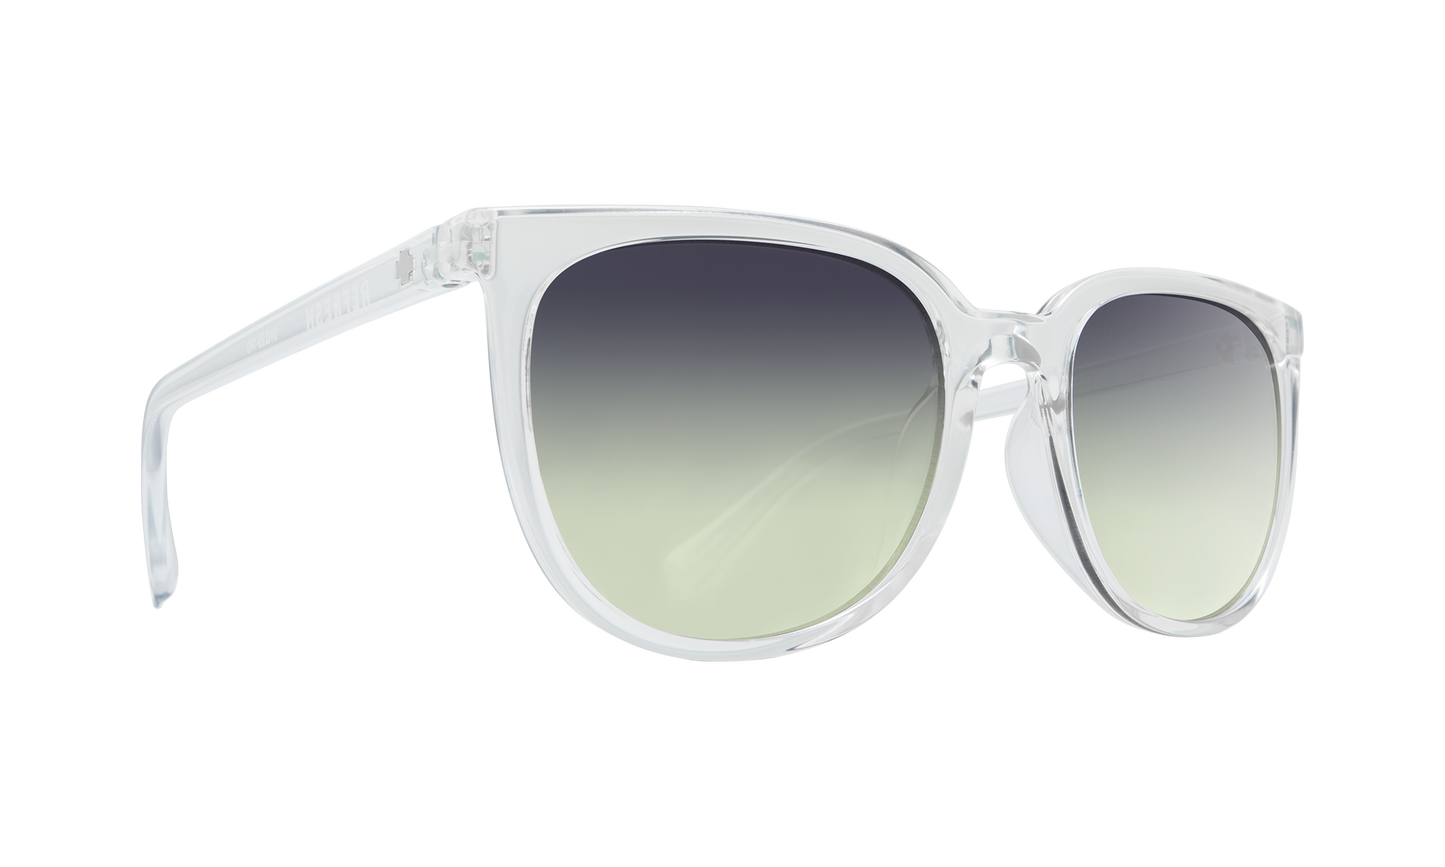 SPY Fizz Sunglasses  Green Sunset Fade Clear  53-21-145